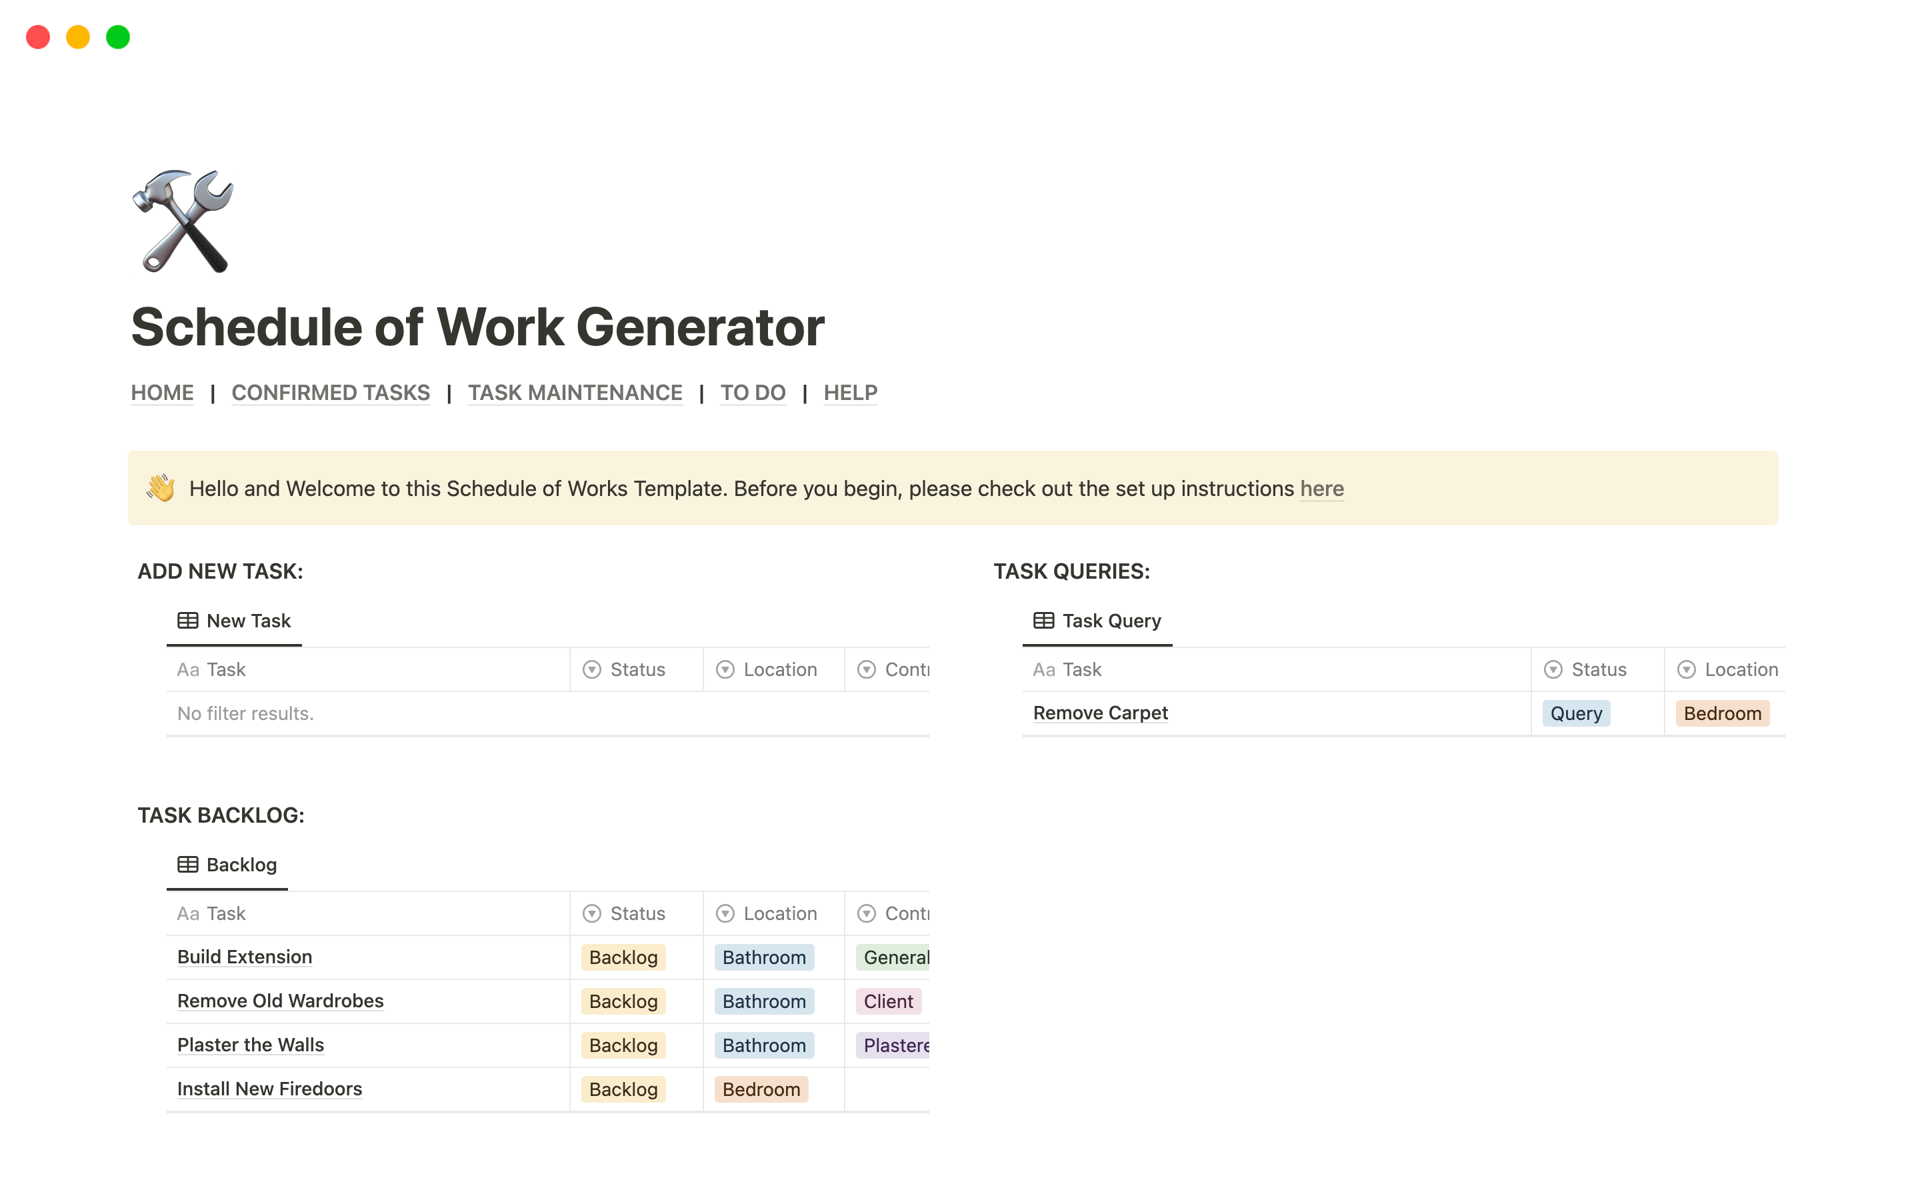 Schedule of Construction Work Generatorのテンプレートのプレビュー